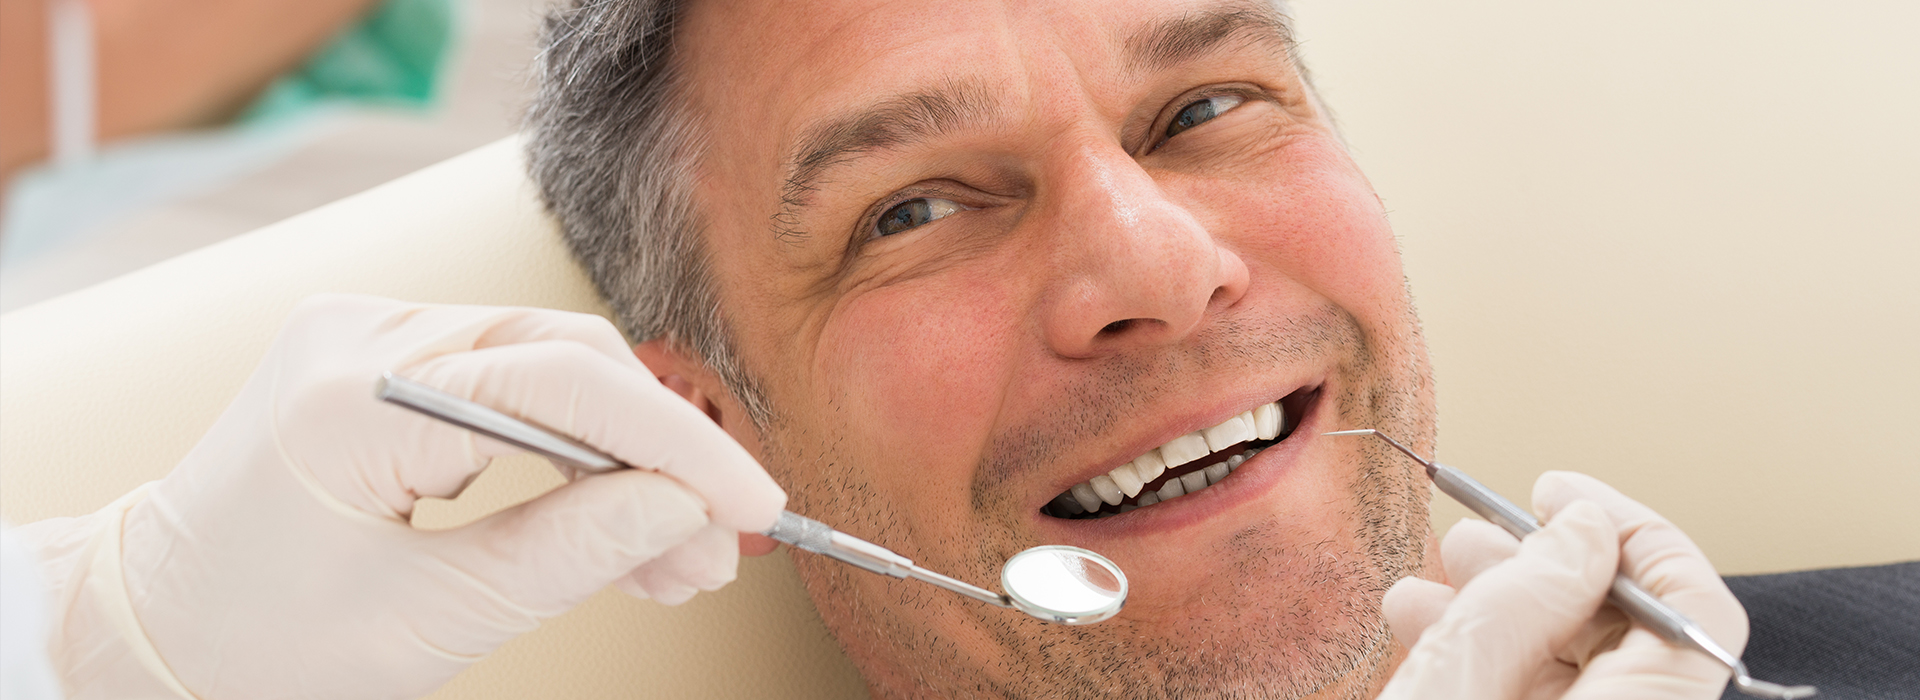 Appleseed Dental | Teeth Whitening, Periodontal Treatment and Digital Impressions